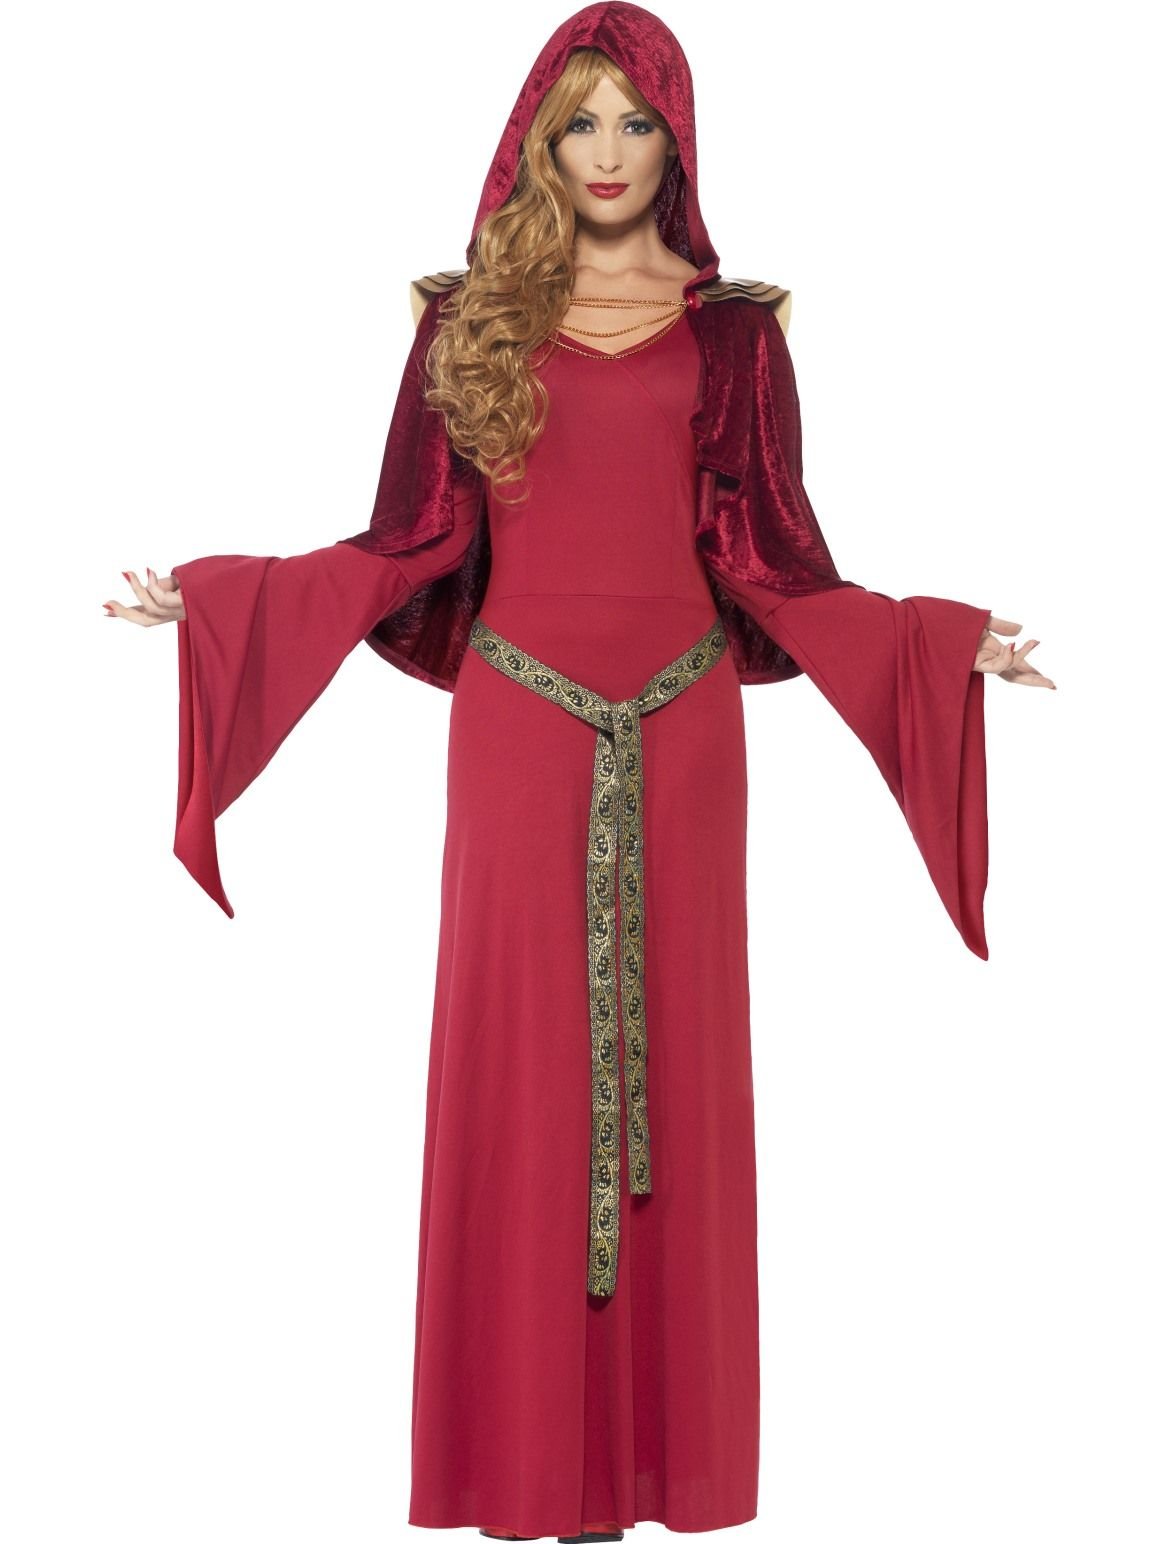 Costume Adult High Priestess Medieval Princess